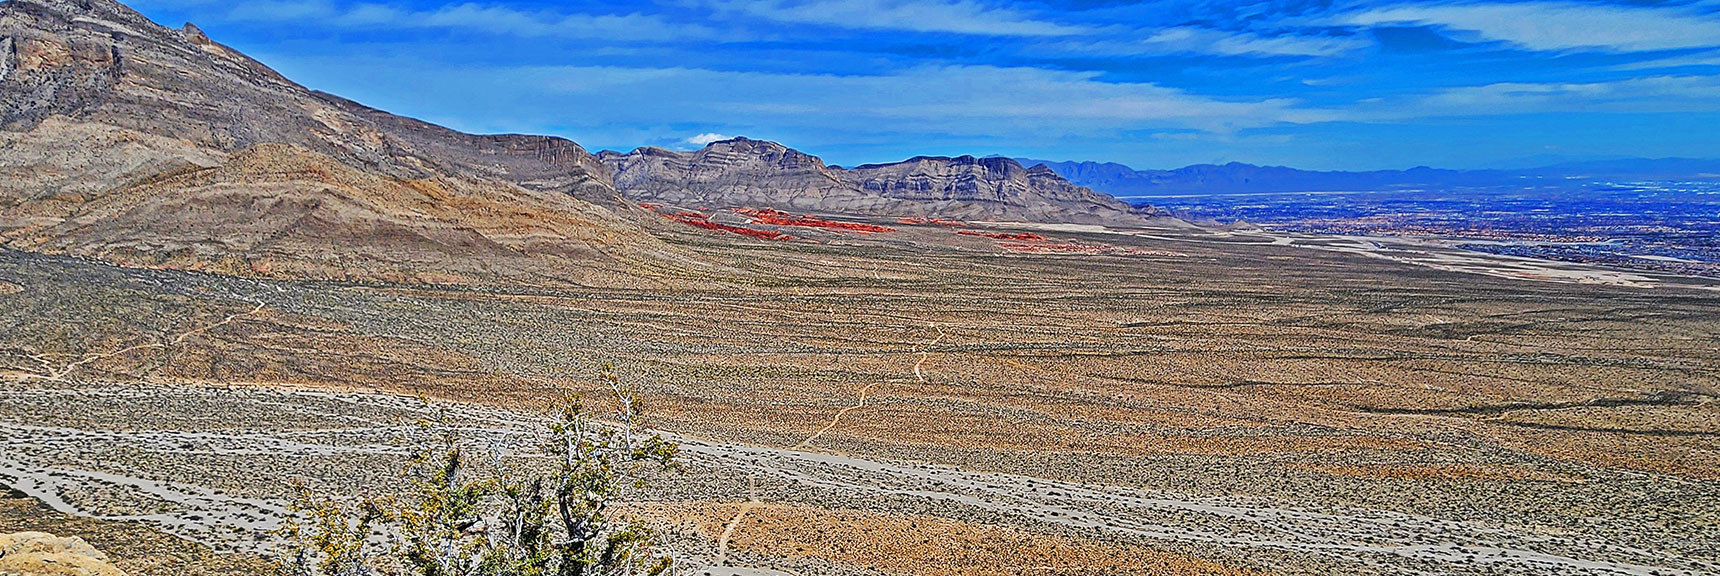 Note Brownstone Basin Trail Below Toward Little Red Rock. | Gray Cap Ridge / Brownstone Basin Loop | La Madre Mountains Wilderness, Nevada